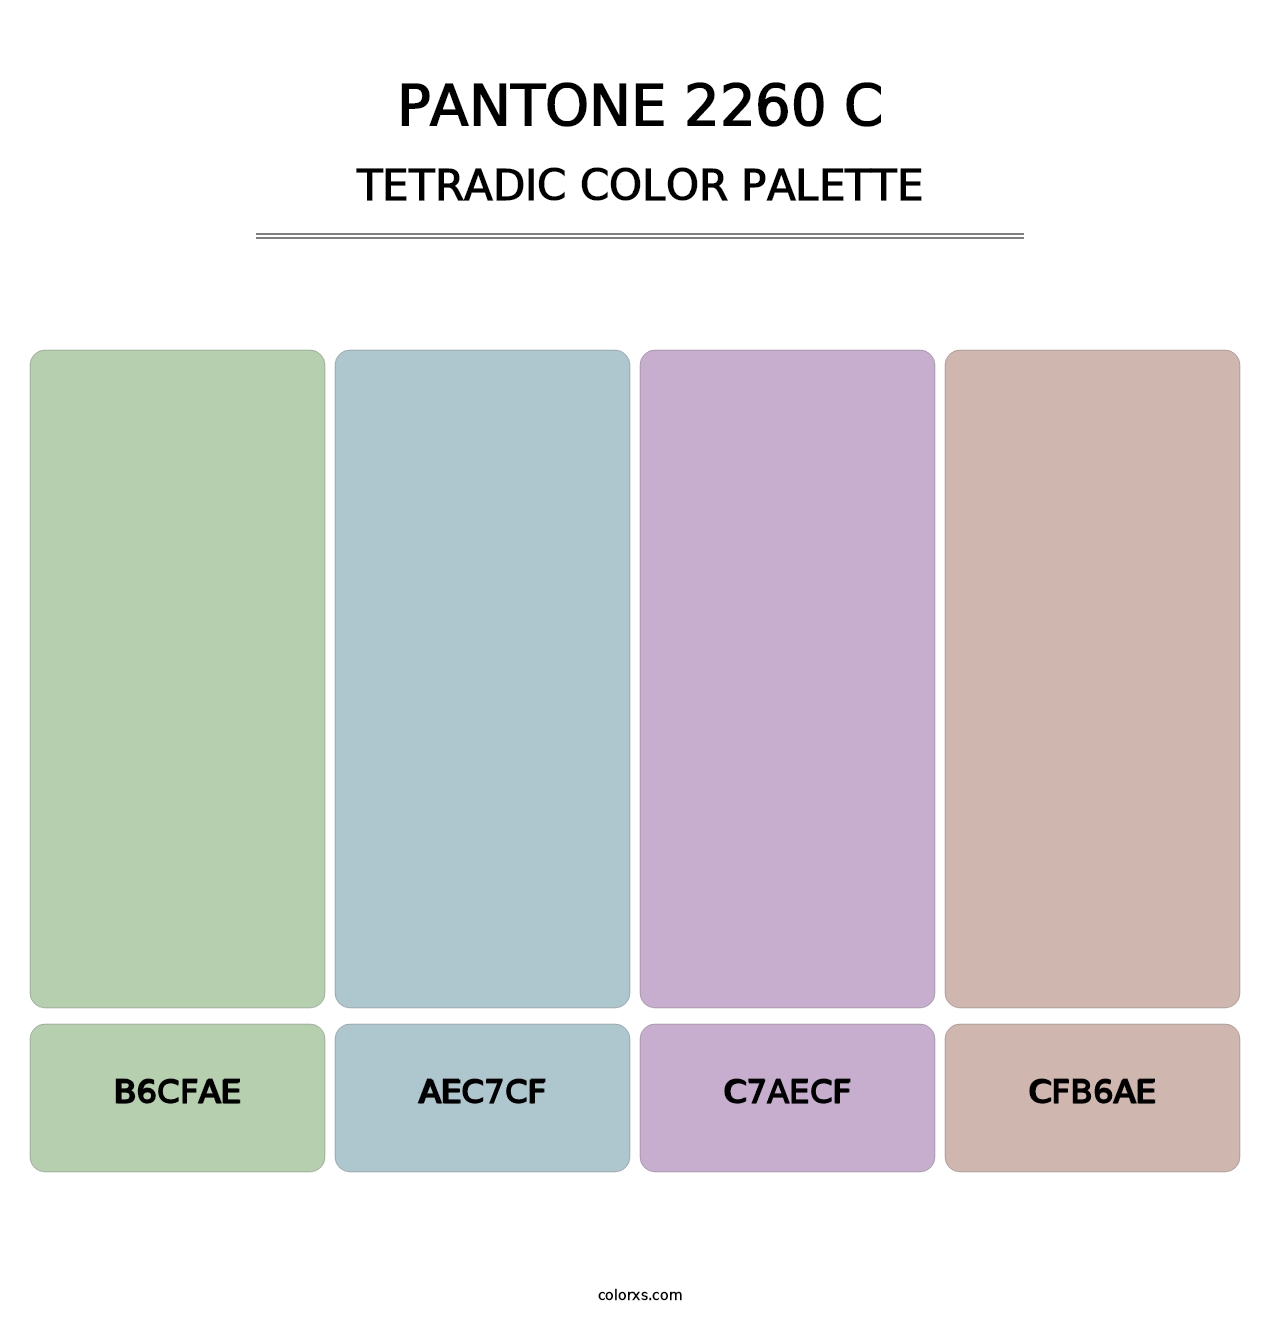 PANTONE 2260 C - Tetradic Color Palette